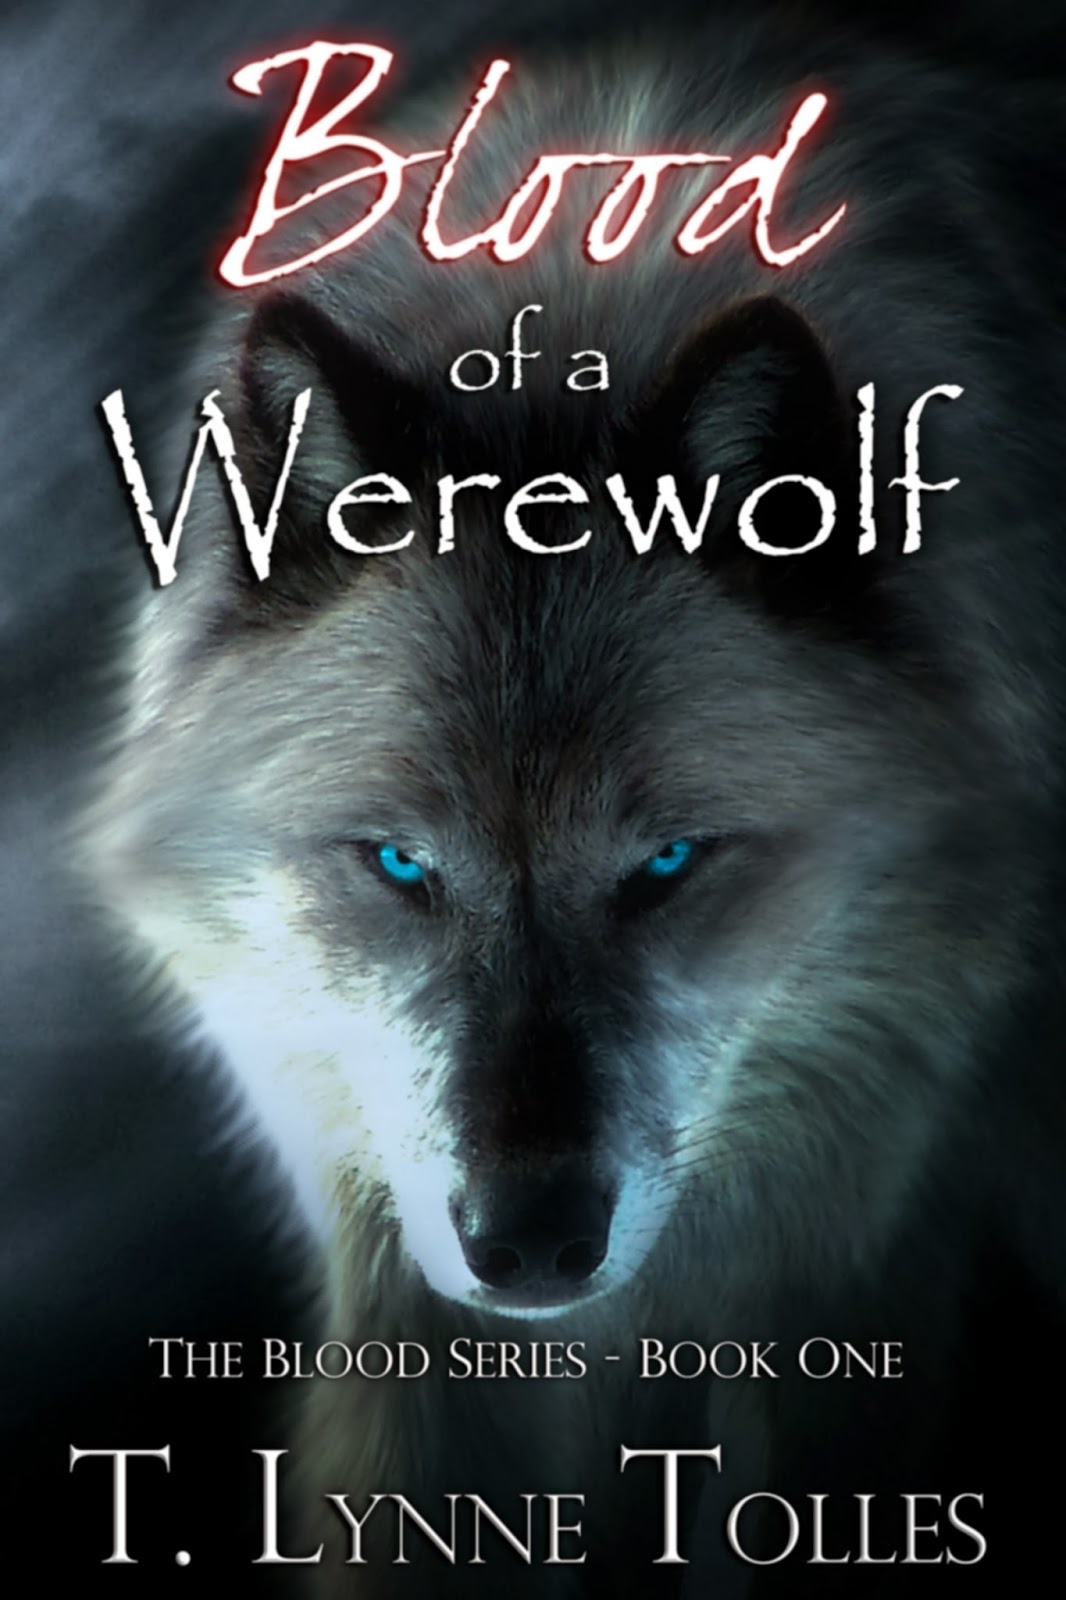 Книга оборотень 18. Книги про оборотней. Книга Werewolf. Книга Волколак.